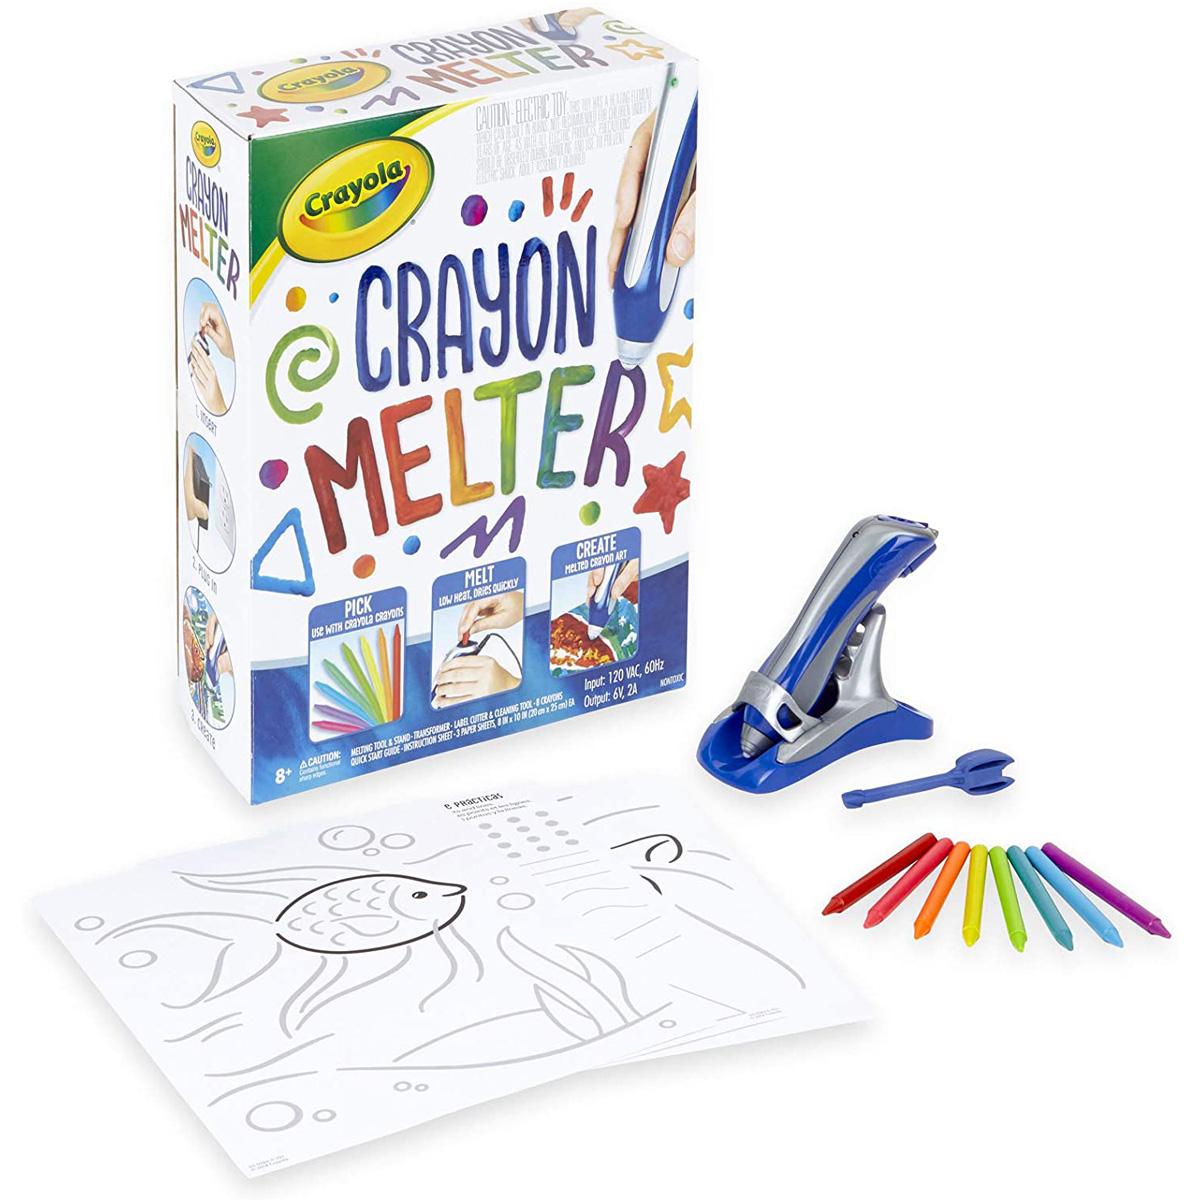 Crayola Crayon Melter Art Kit for $9.97